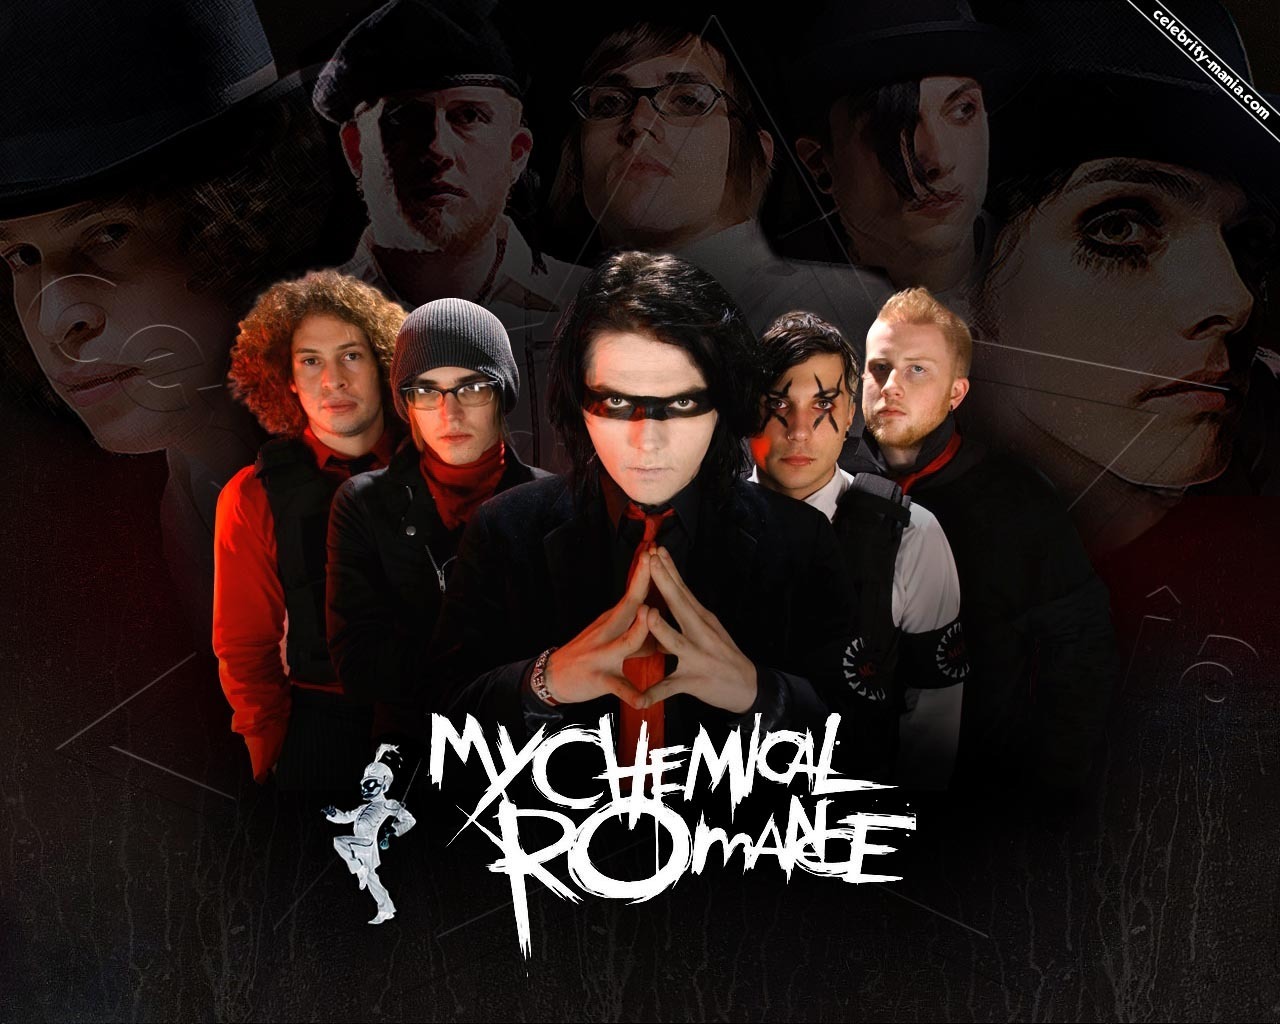 MCR - My Chemical Romance Wallpaper (15235013) - Fanpop